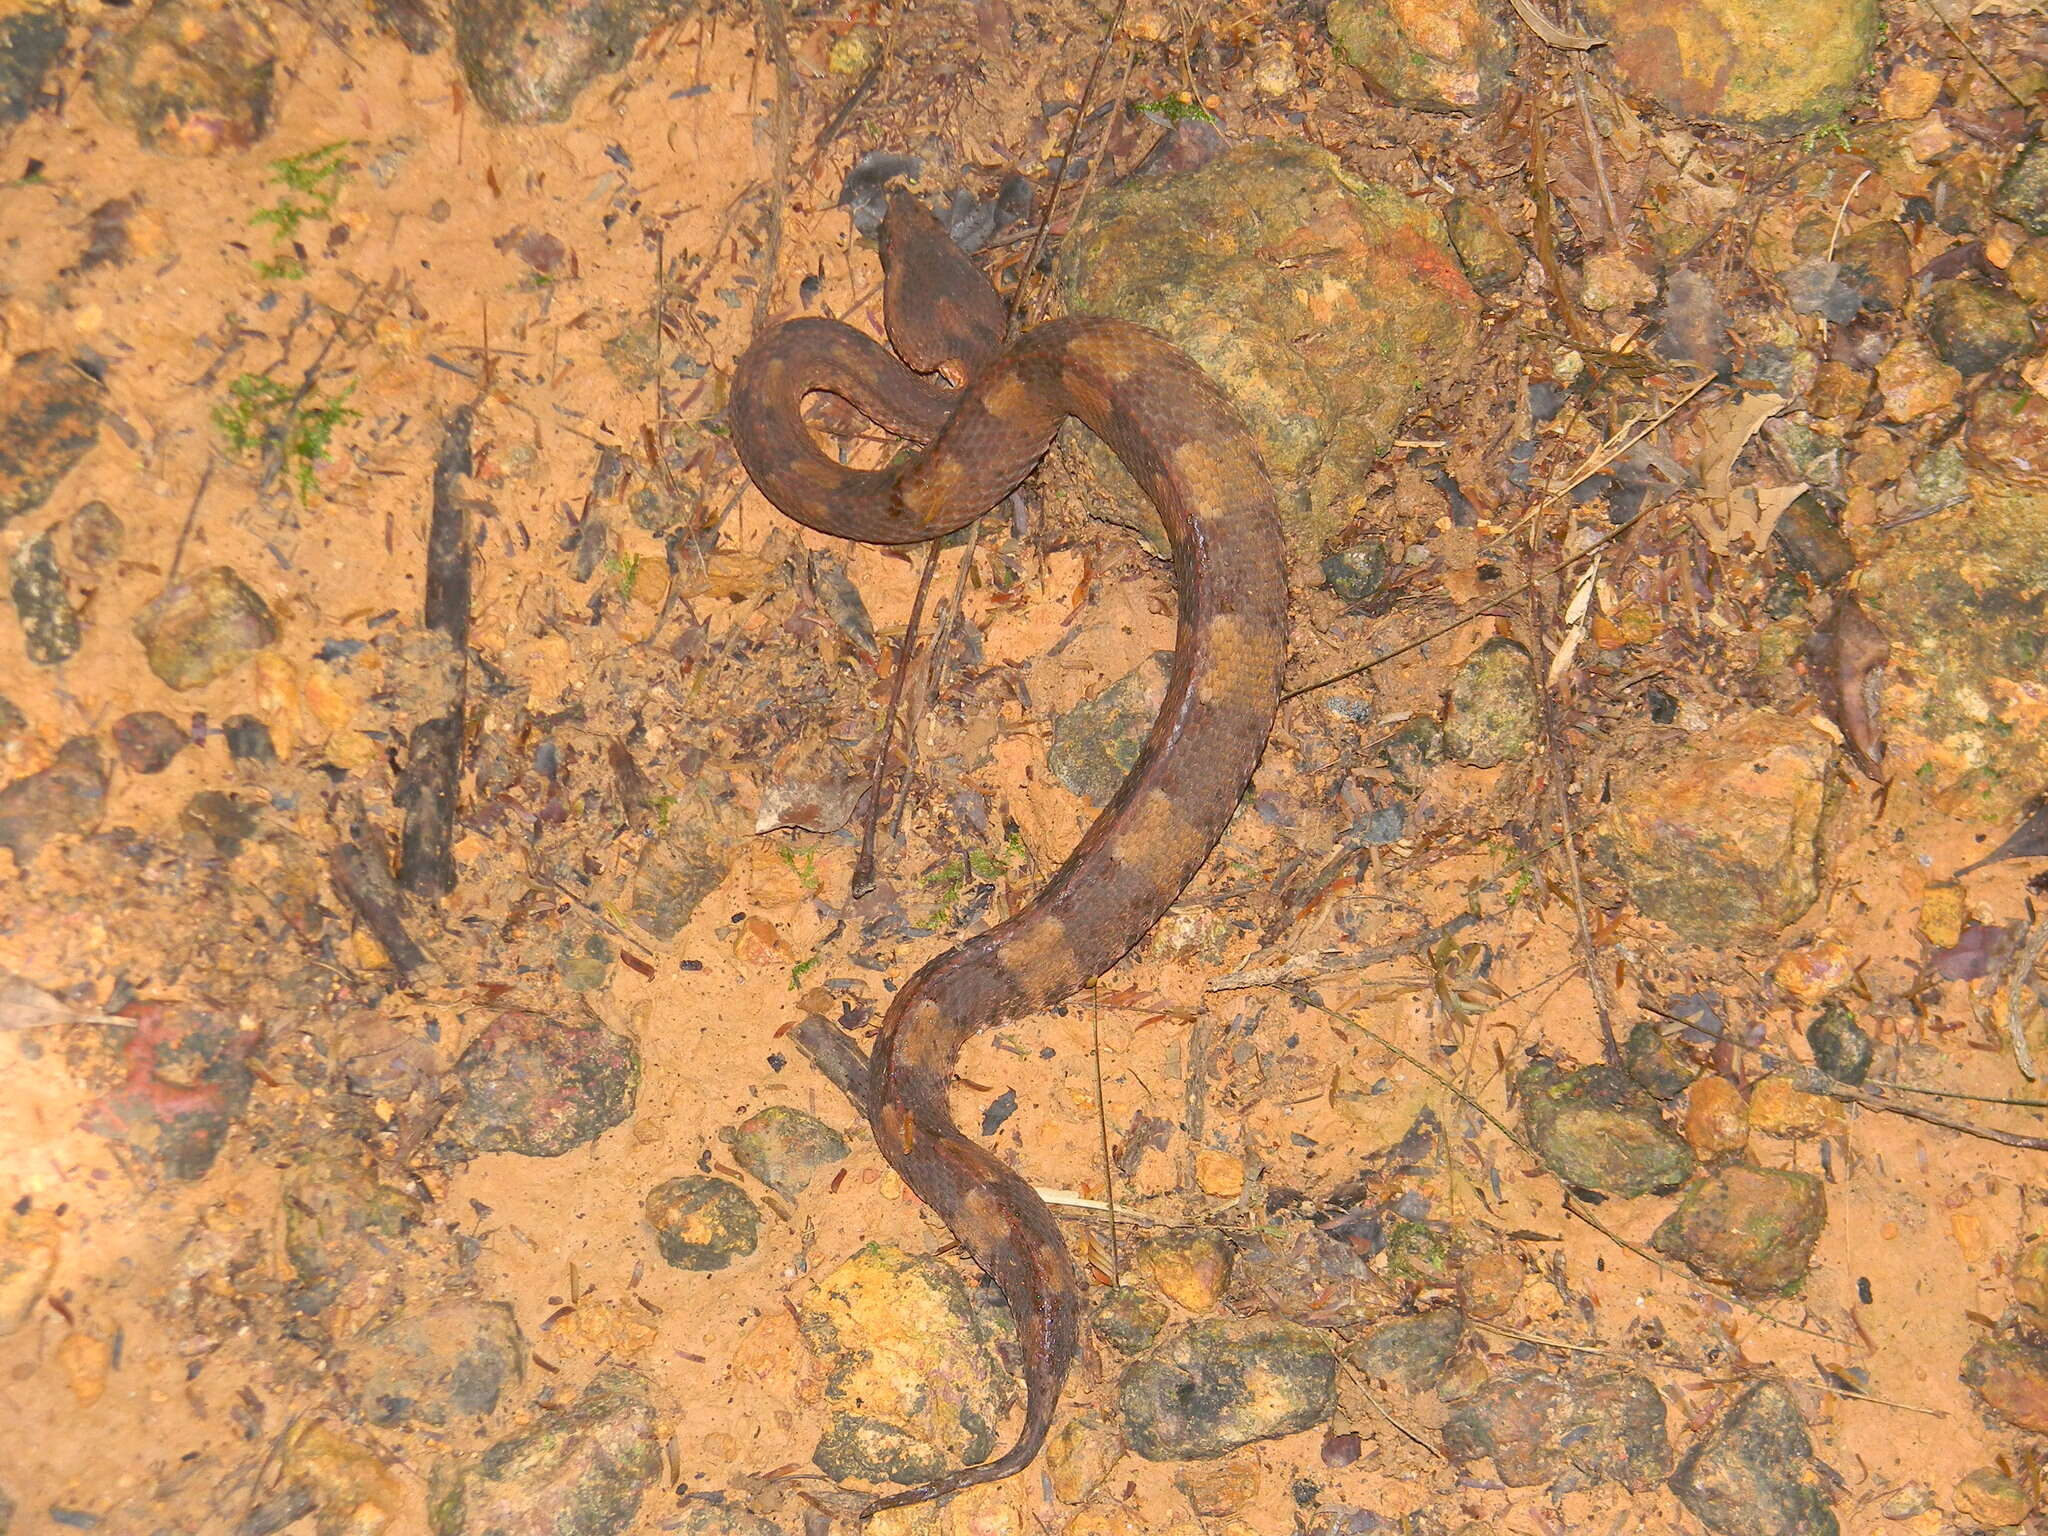 Image of Hognosed Pit Viper